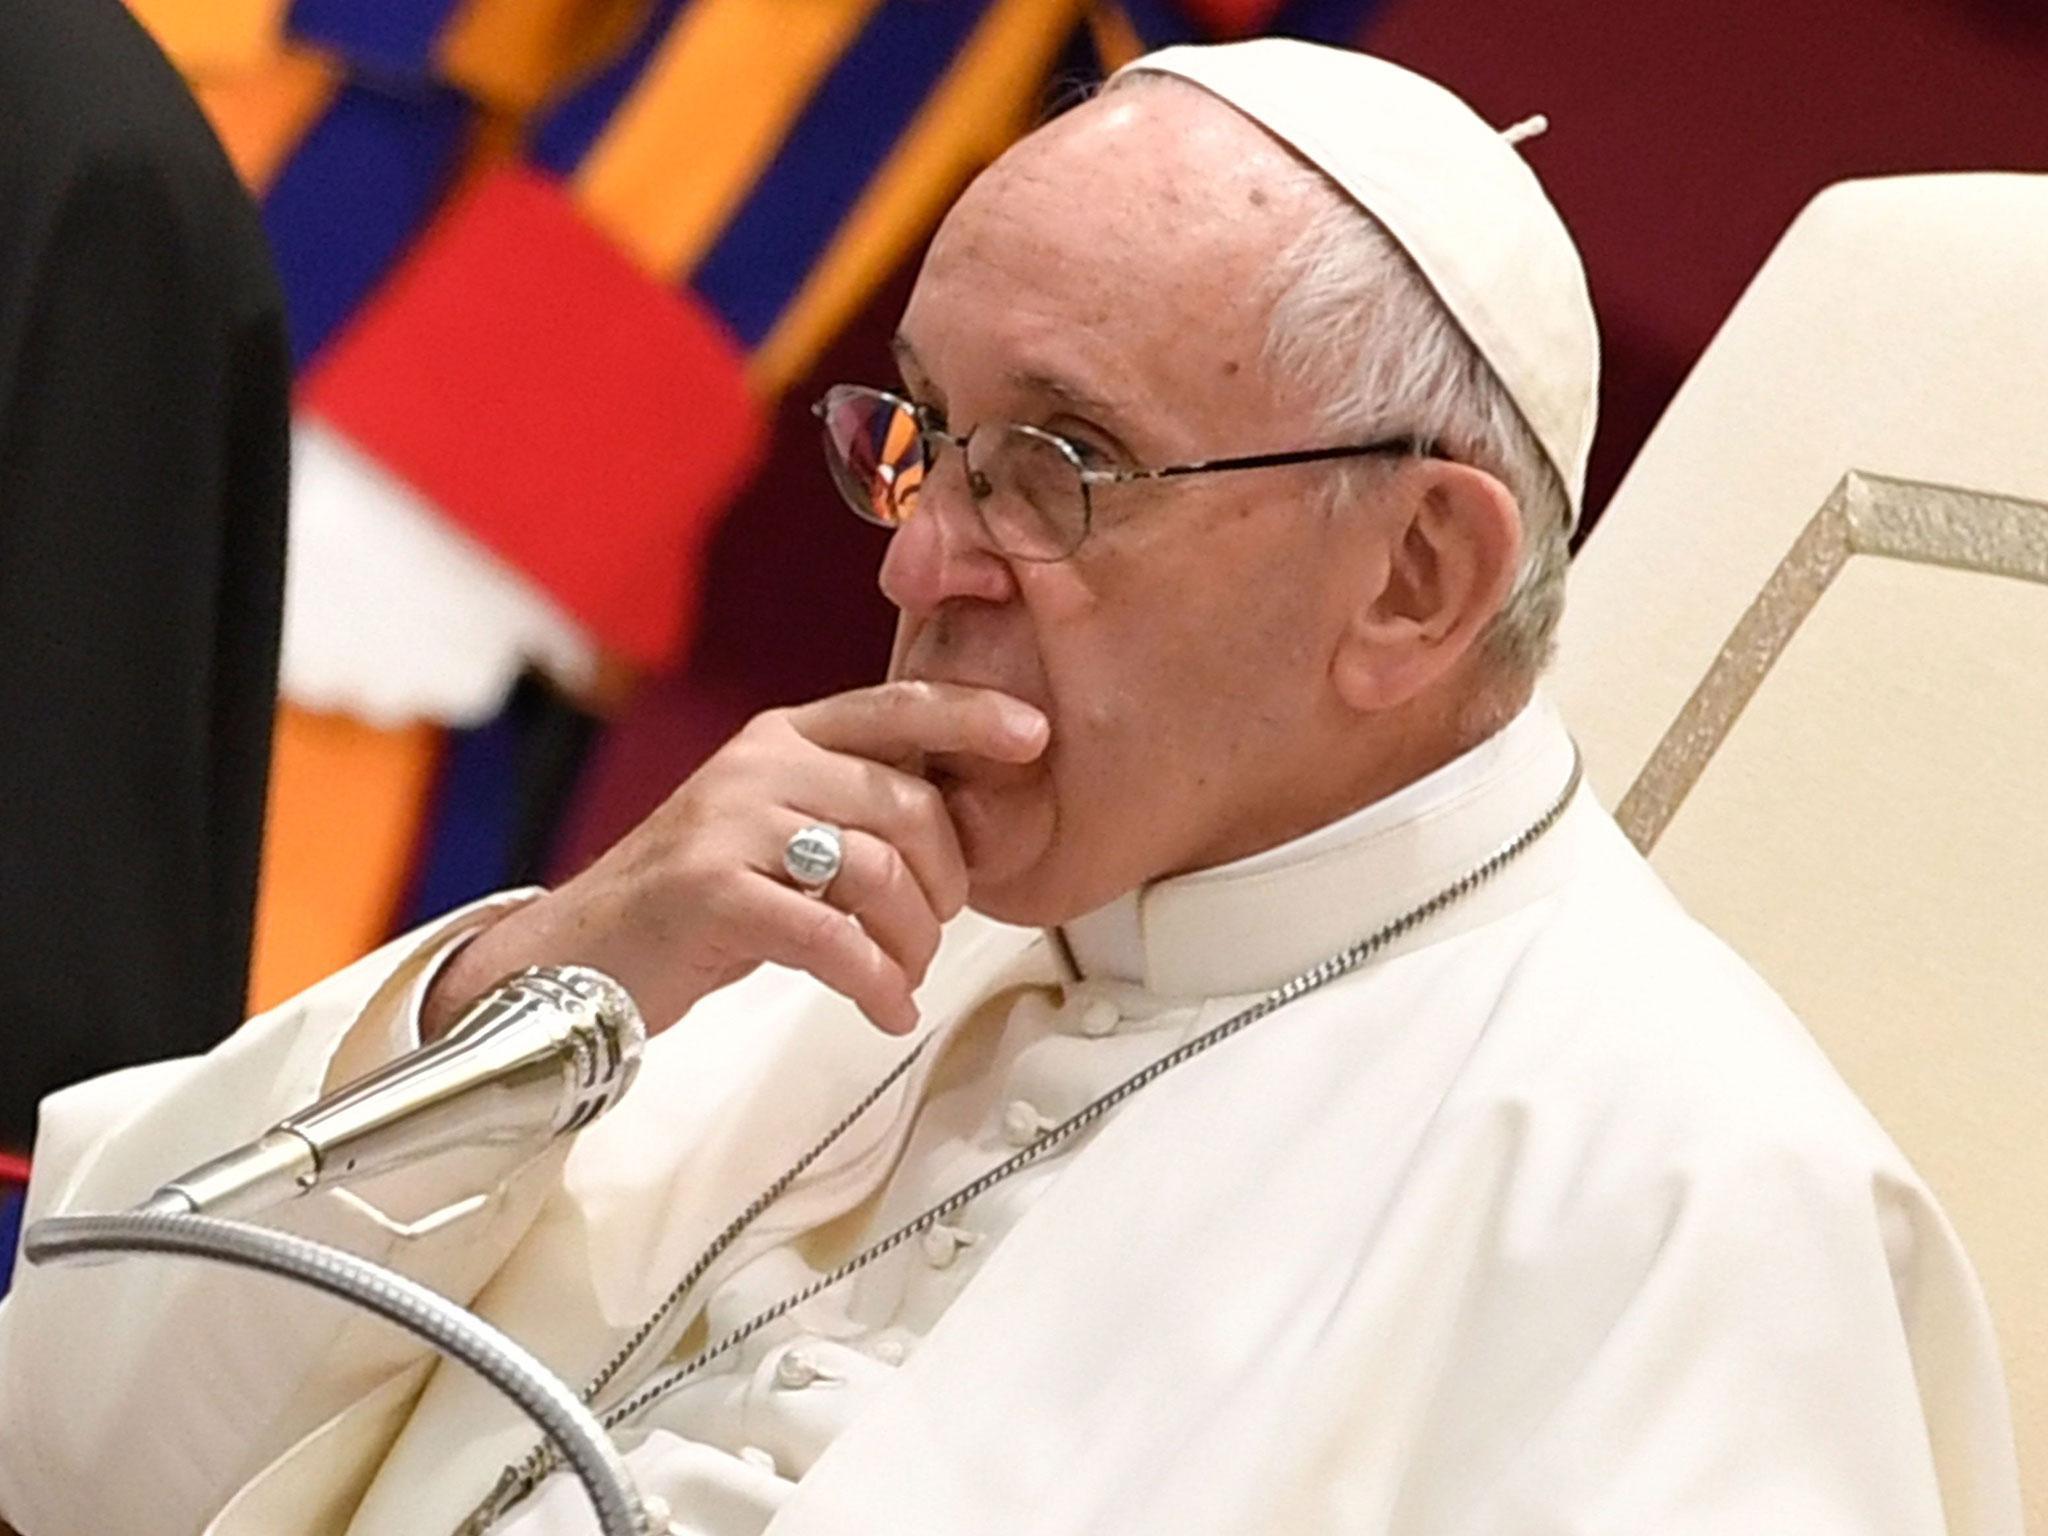 Pope Francis said the accusations against Bishop Juan Barros were 'slander'